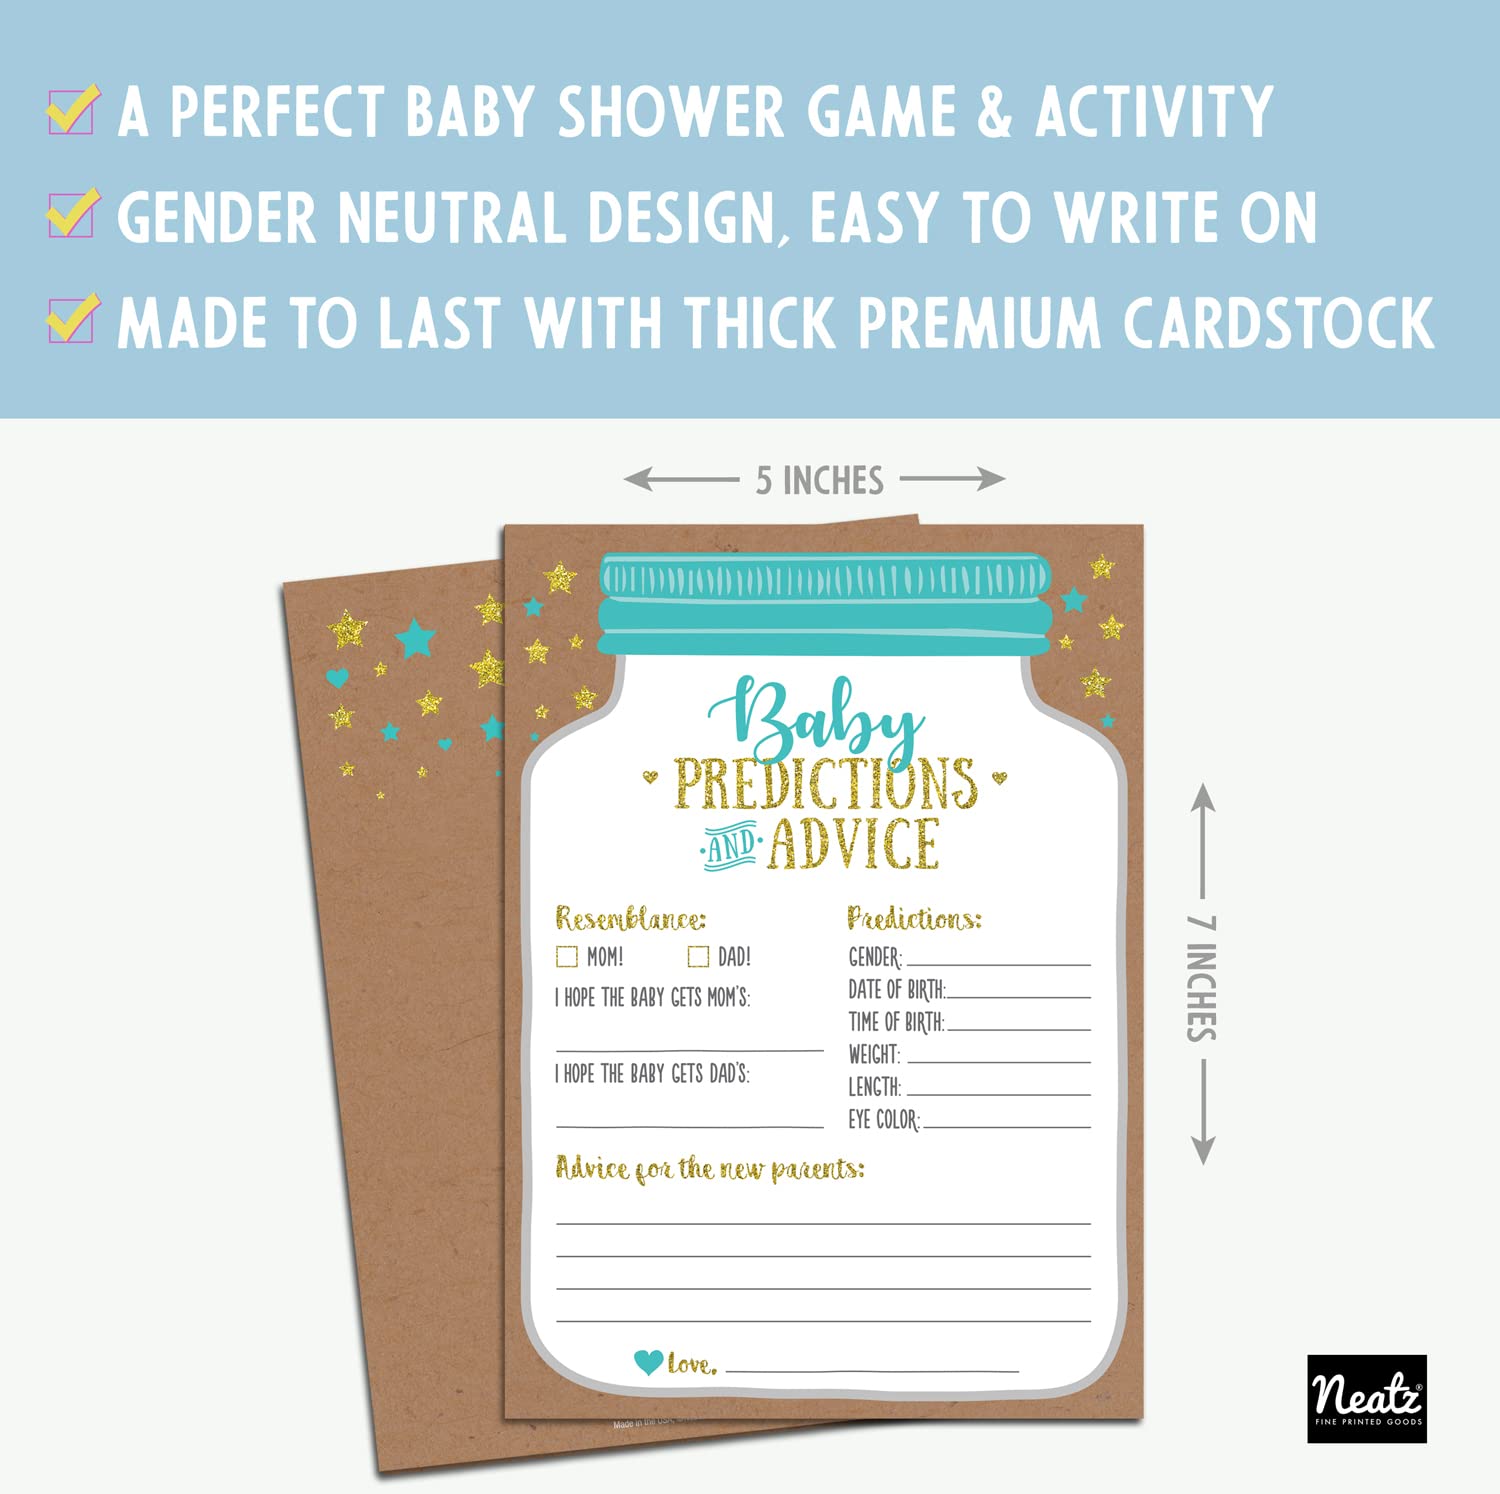 Neatz 50 Mason Jar Baby Shower Prediction and Advice Cards - Gender Neutral Boy or Girl, Baby Shower Games, Baby Shower Decorations, Baby Shower Favors